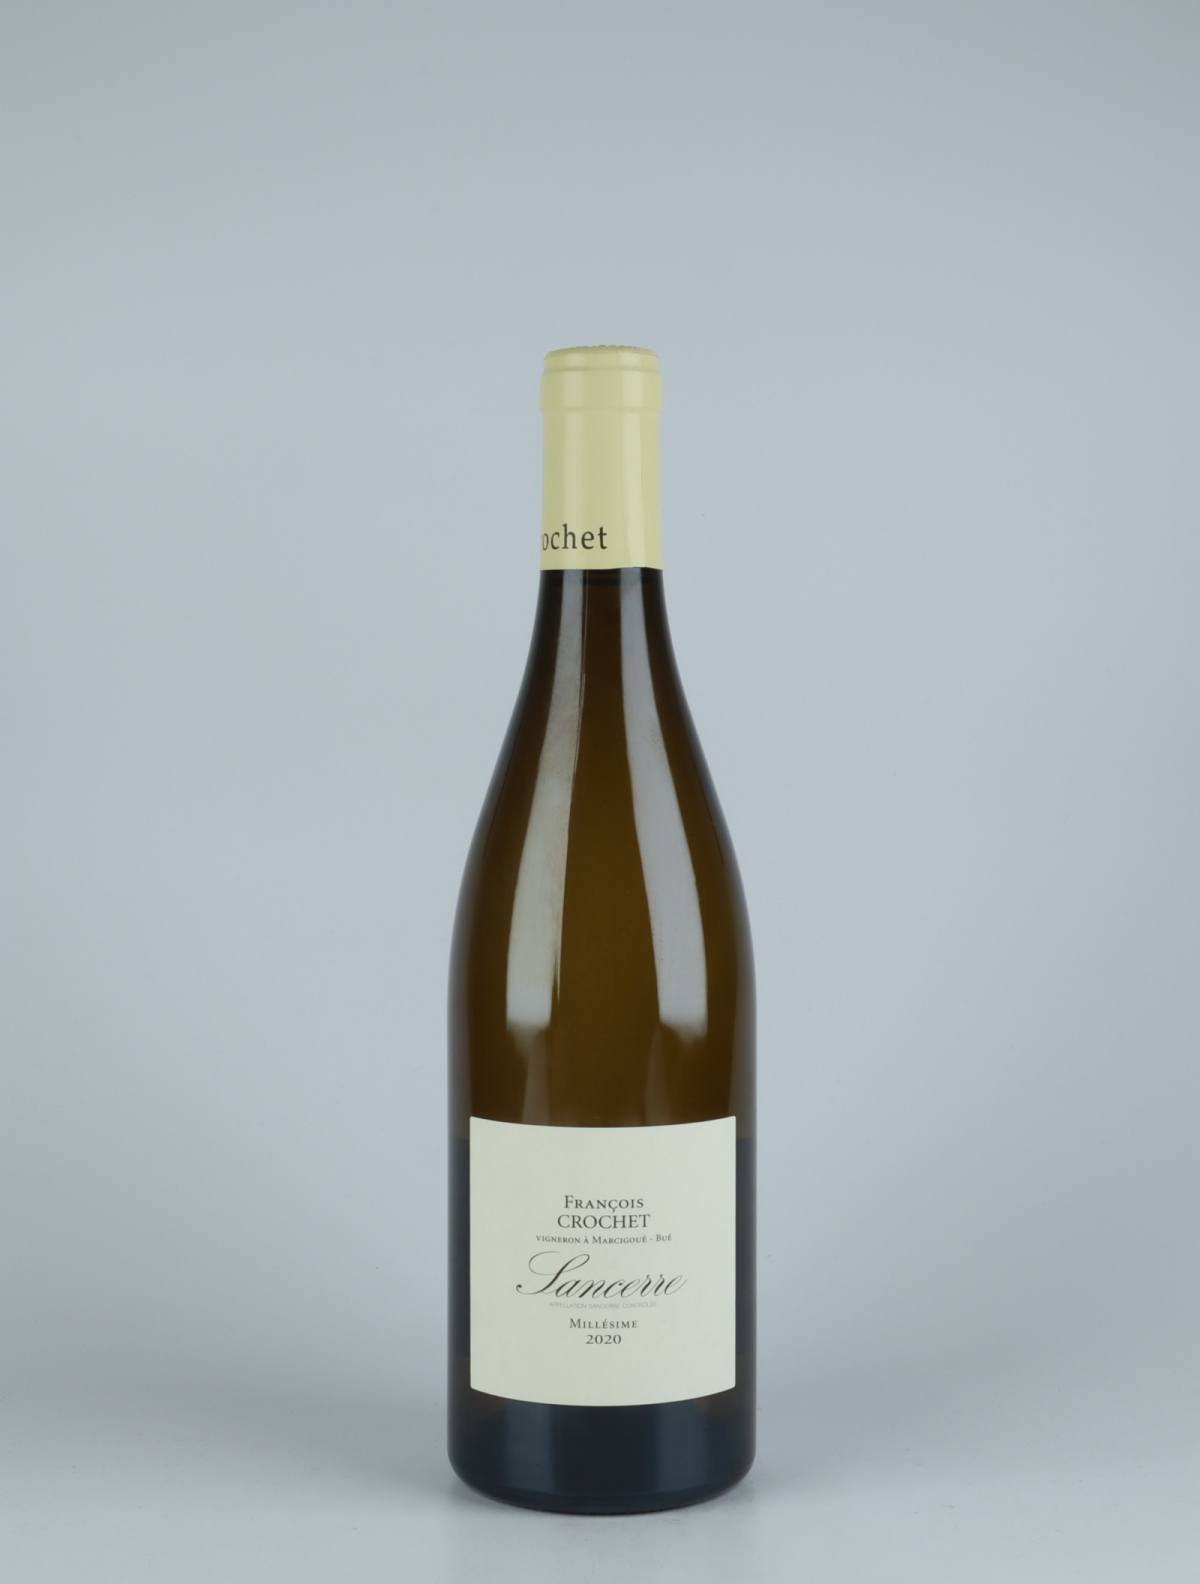 A bottle 2020 Sancerre White wine from , Loire in France